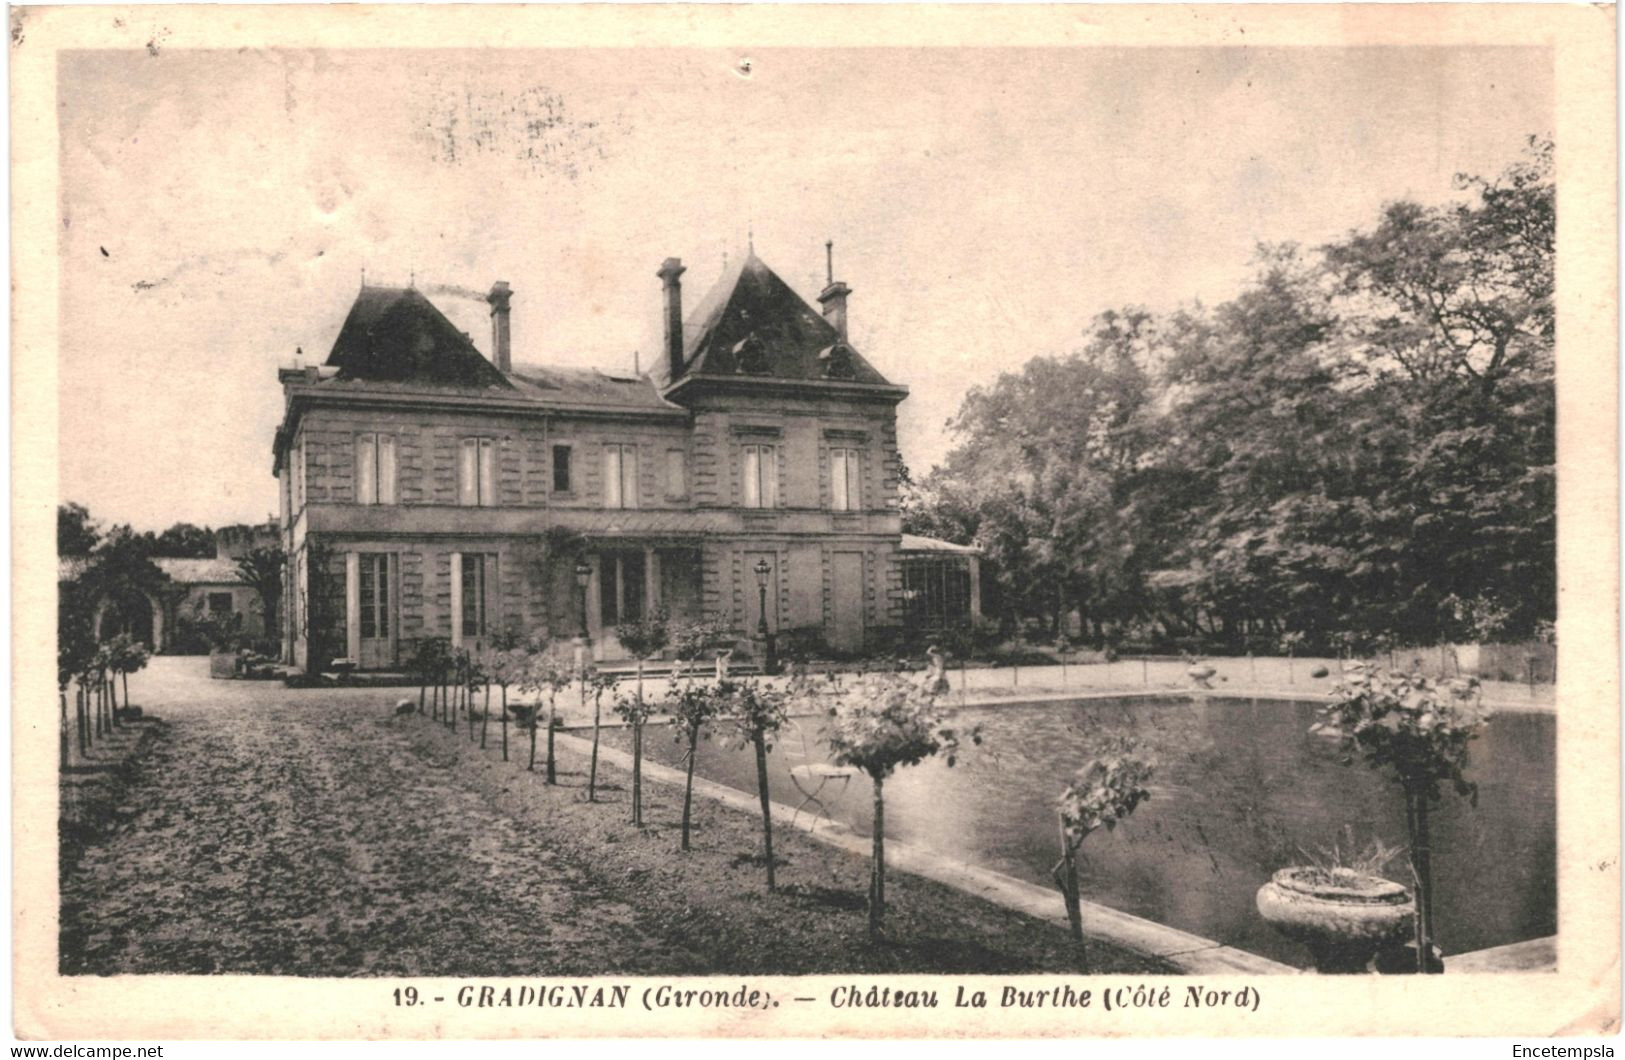 CPA Carte Postale  France  -Gradignan Château  La Burthe  1937  VM45555ok - Gradignan